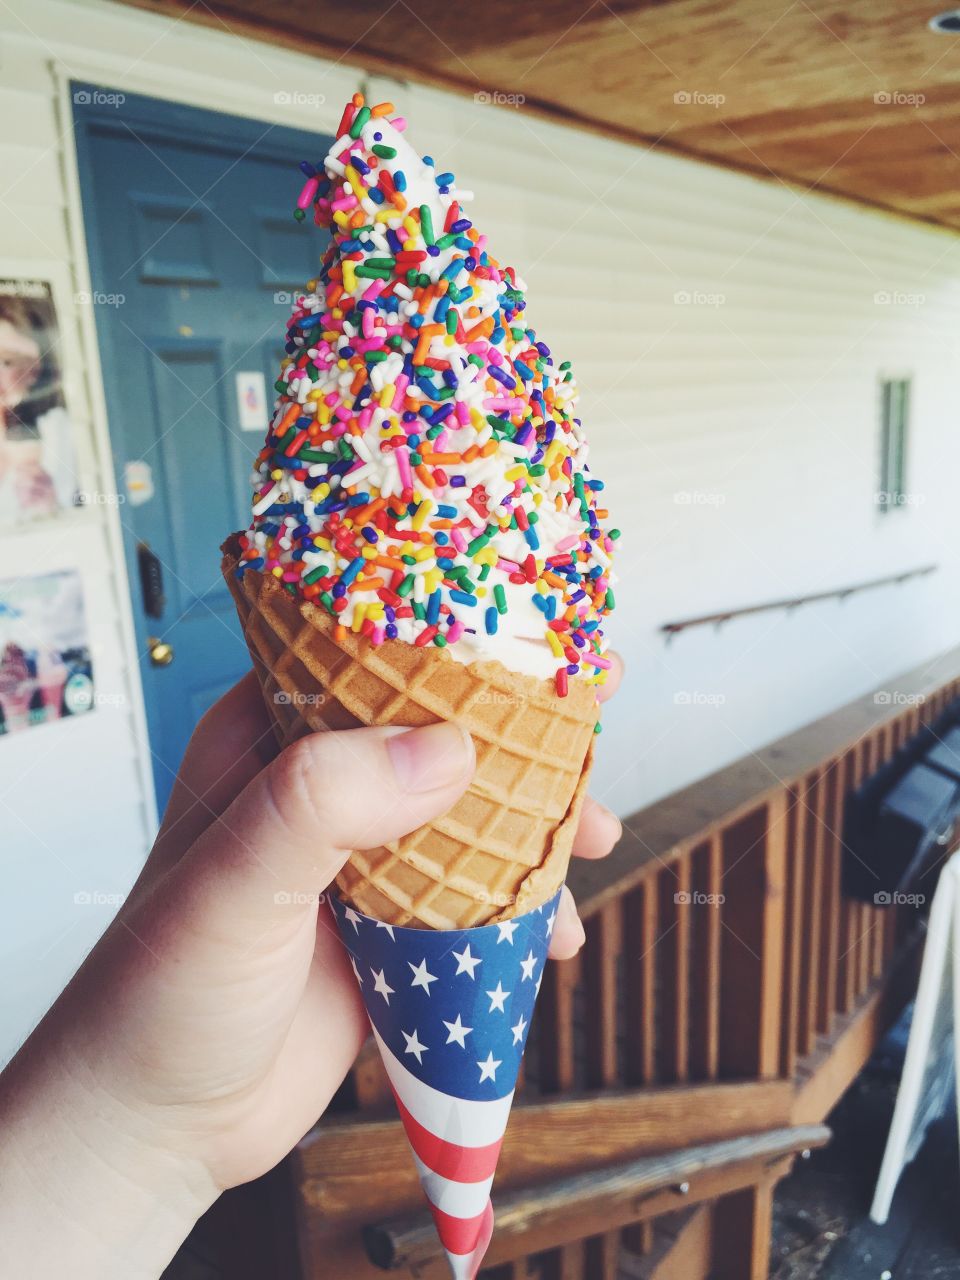 Ice cream. Taken in Hartford, VT